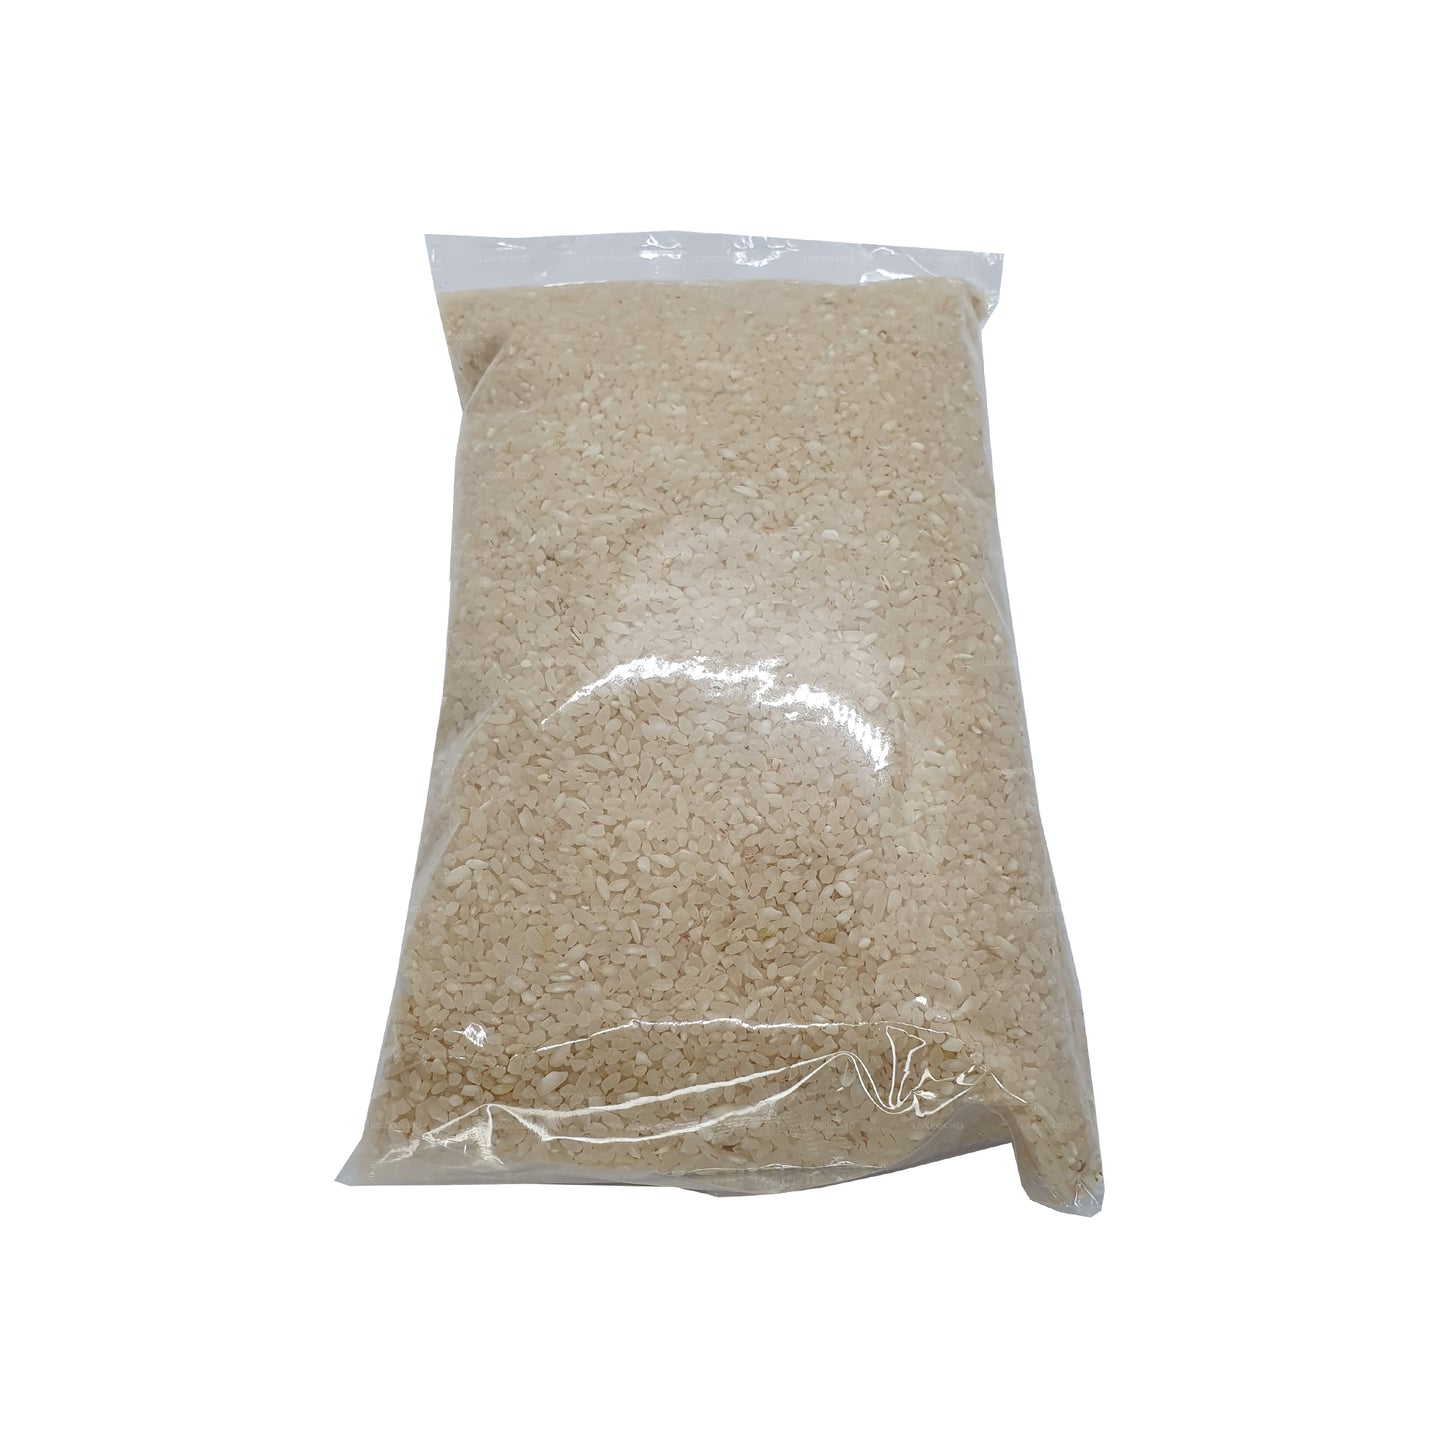 vCeylon Suwandel Rice (3kg)